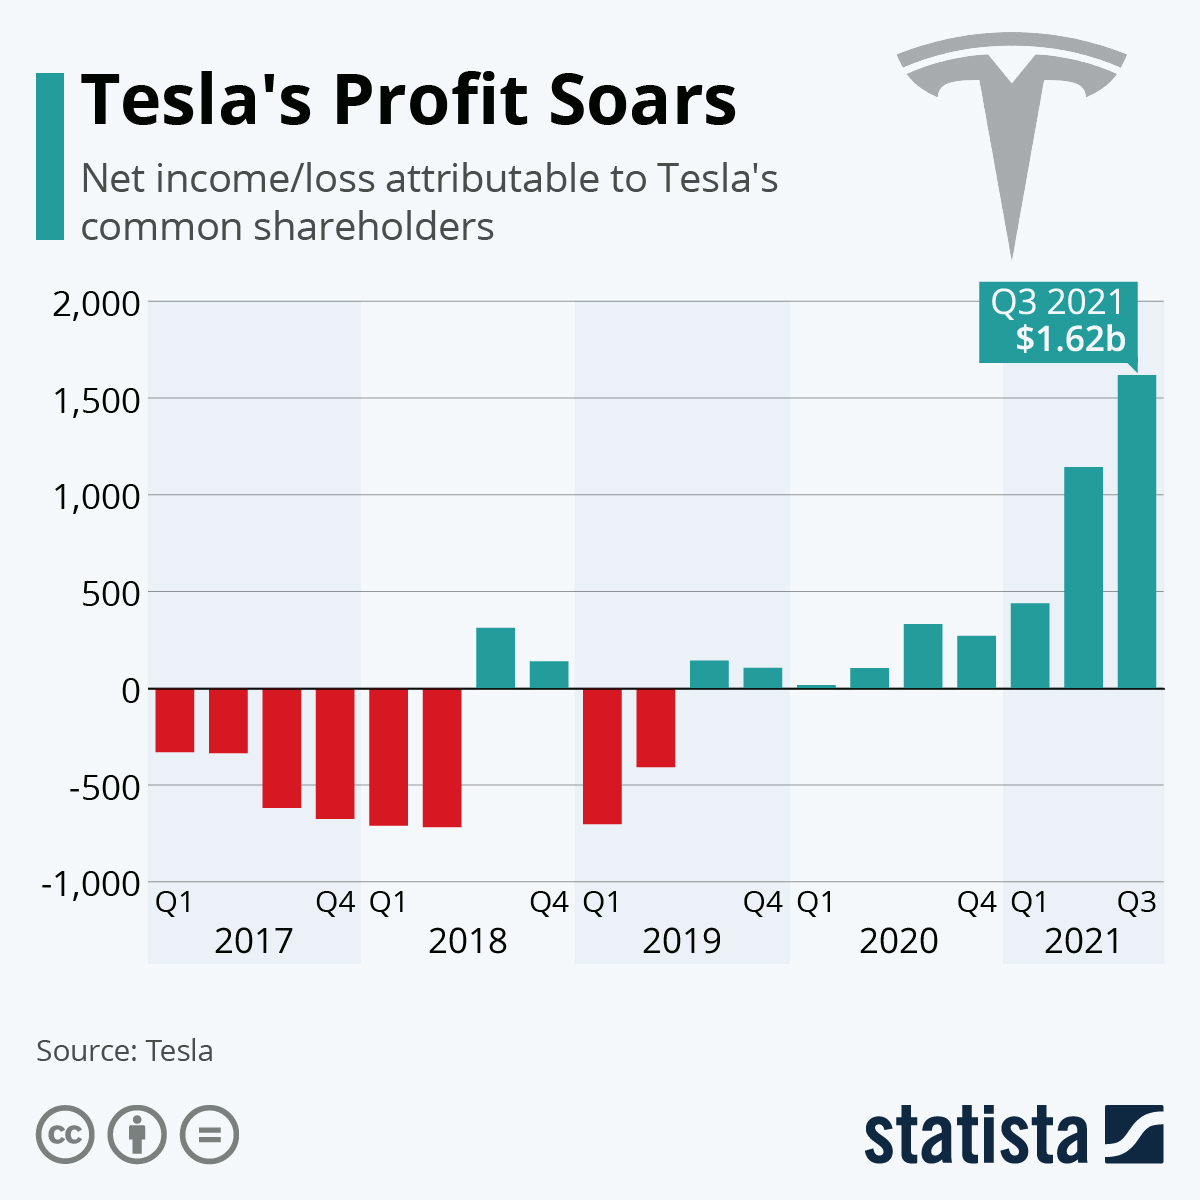 Tesla's Profit Soars Past $1 Billion